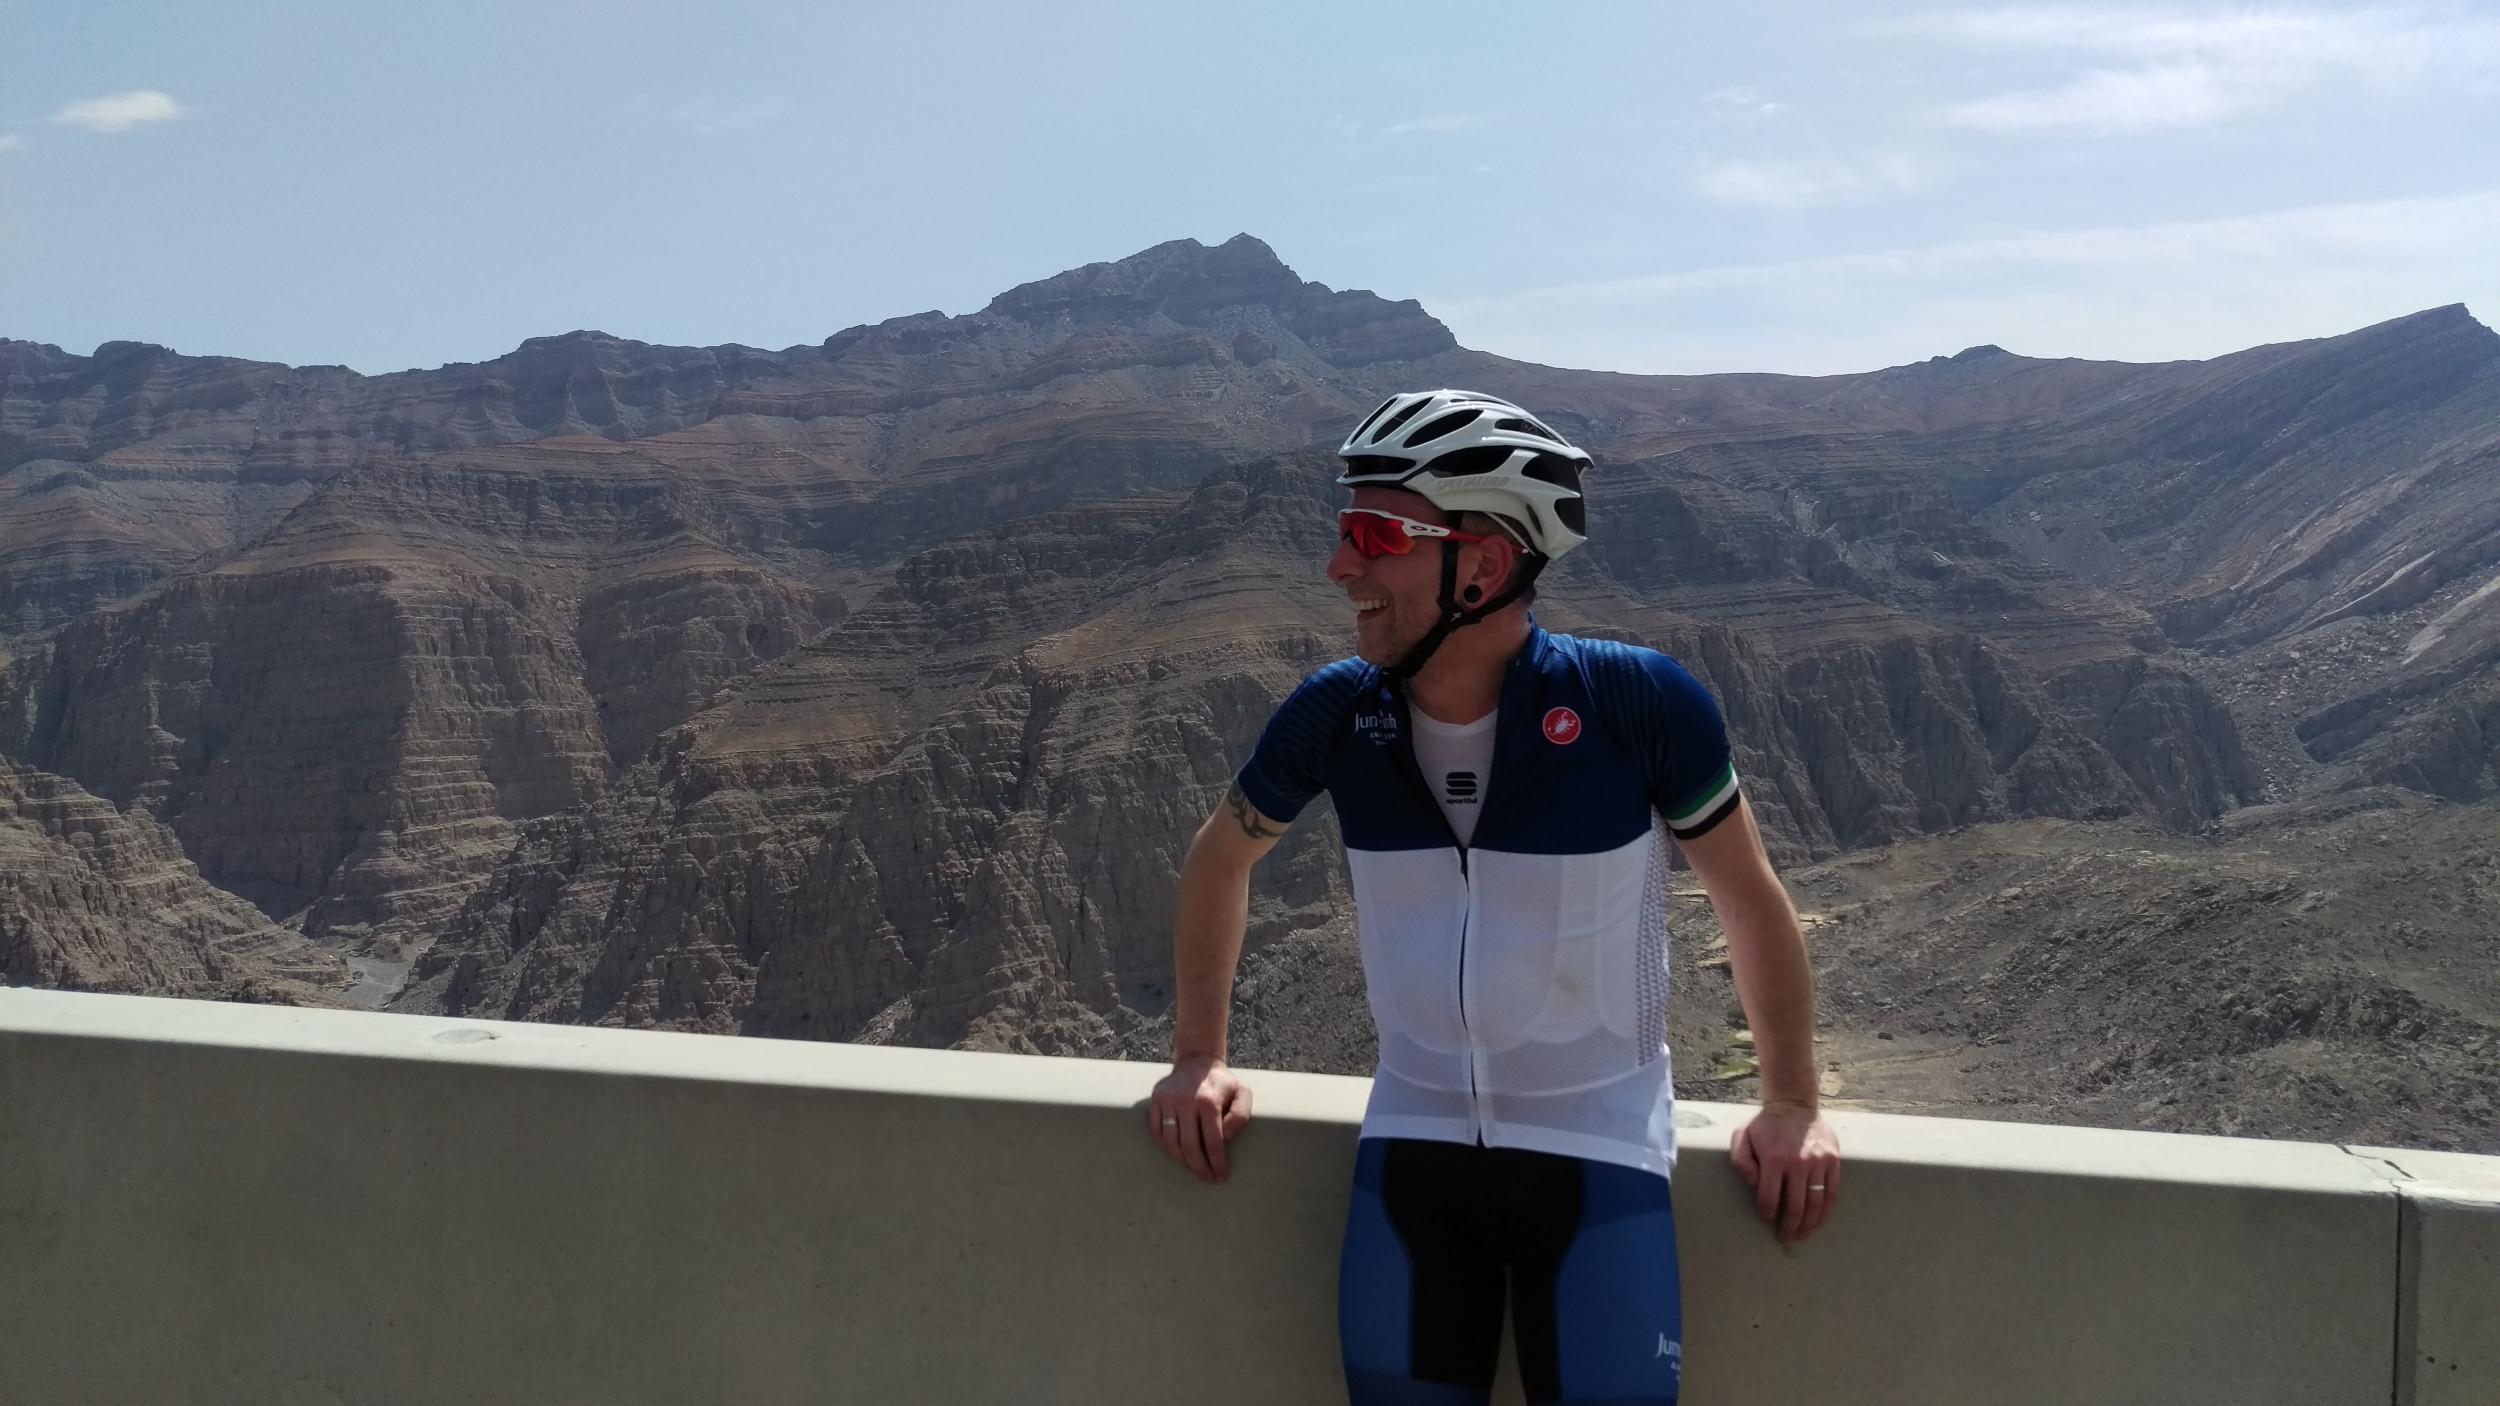 Thousands wouldn't, but Mark enjoyed the switchbacks riding up Jebel Jais